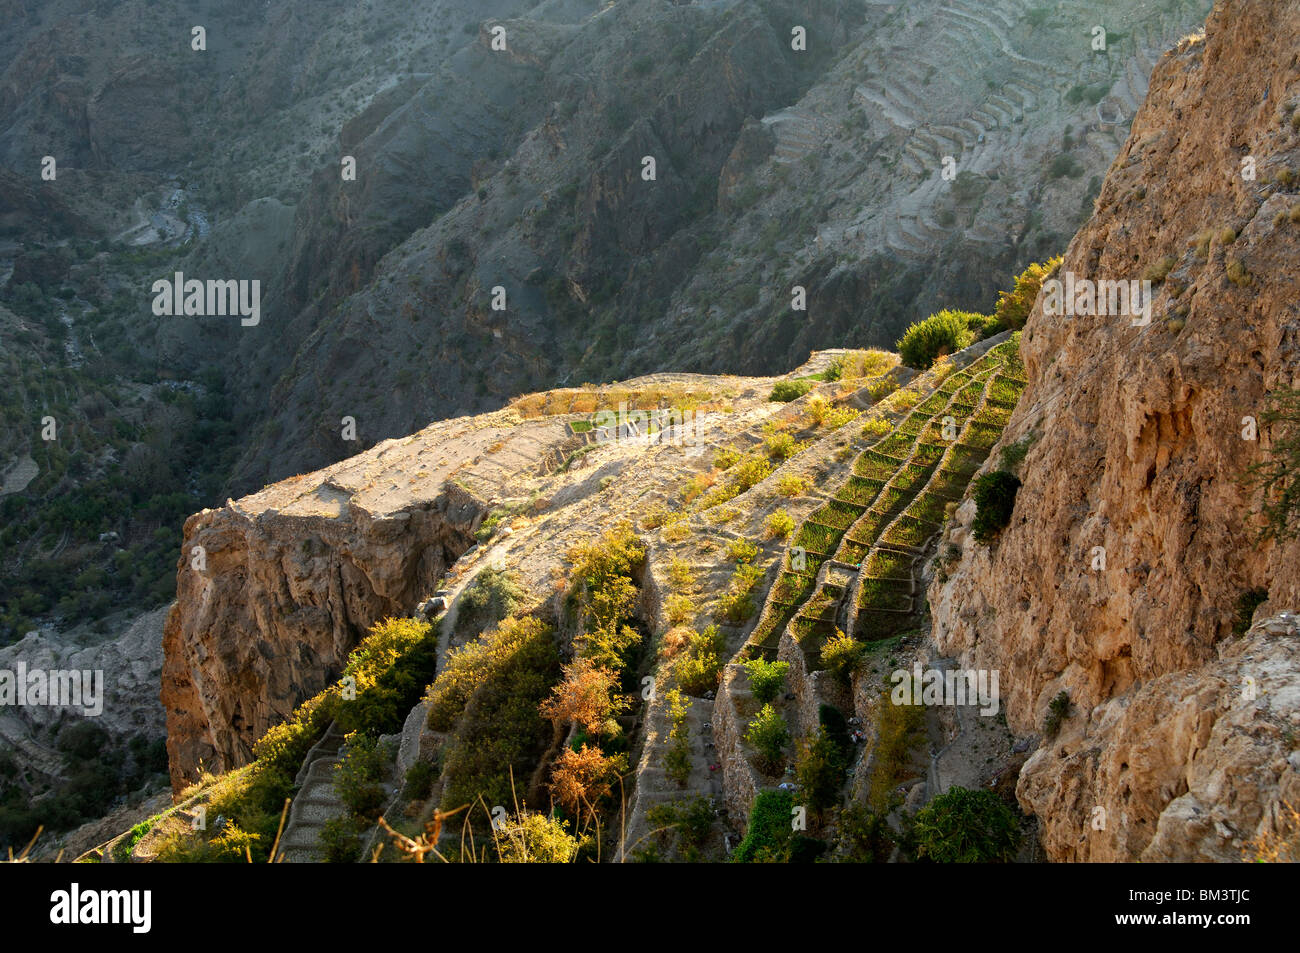 Les parcelles en terrasses près de Ash, Shirayjah Plateau Saiq, Jebel al Alkhdar, Al Hajar mountains, Sultanat d'Oman Banque D'Images